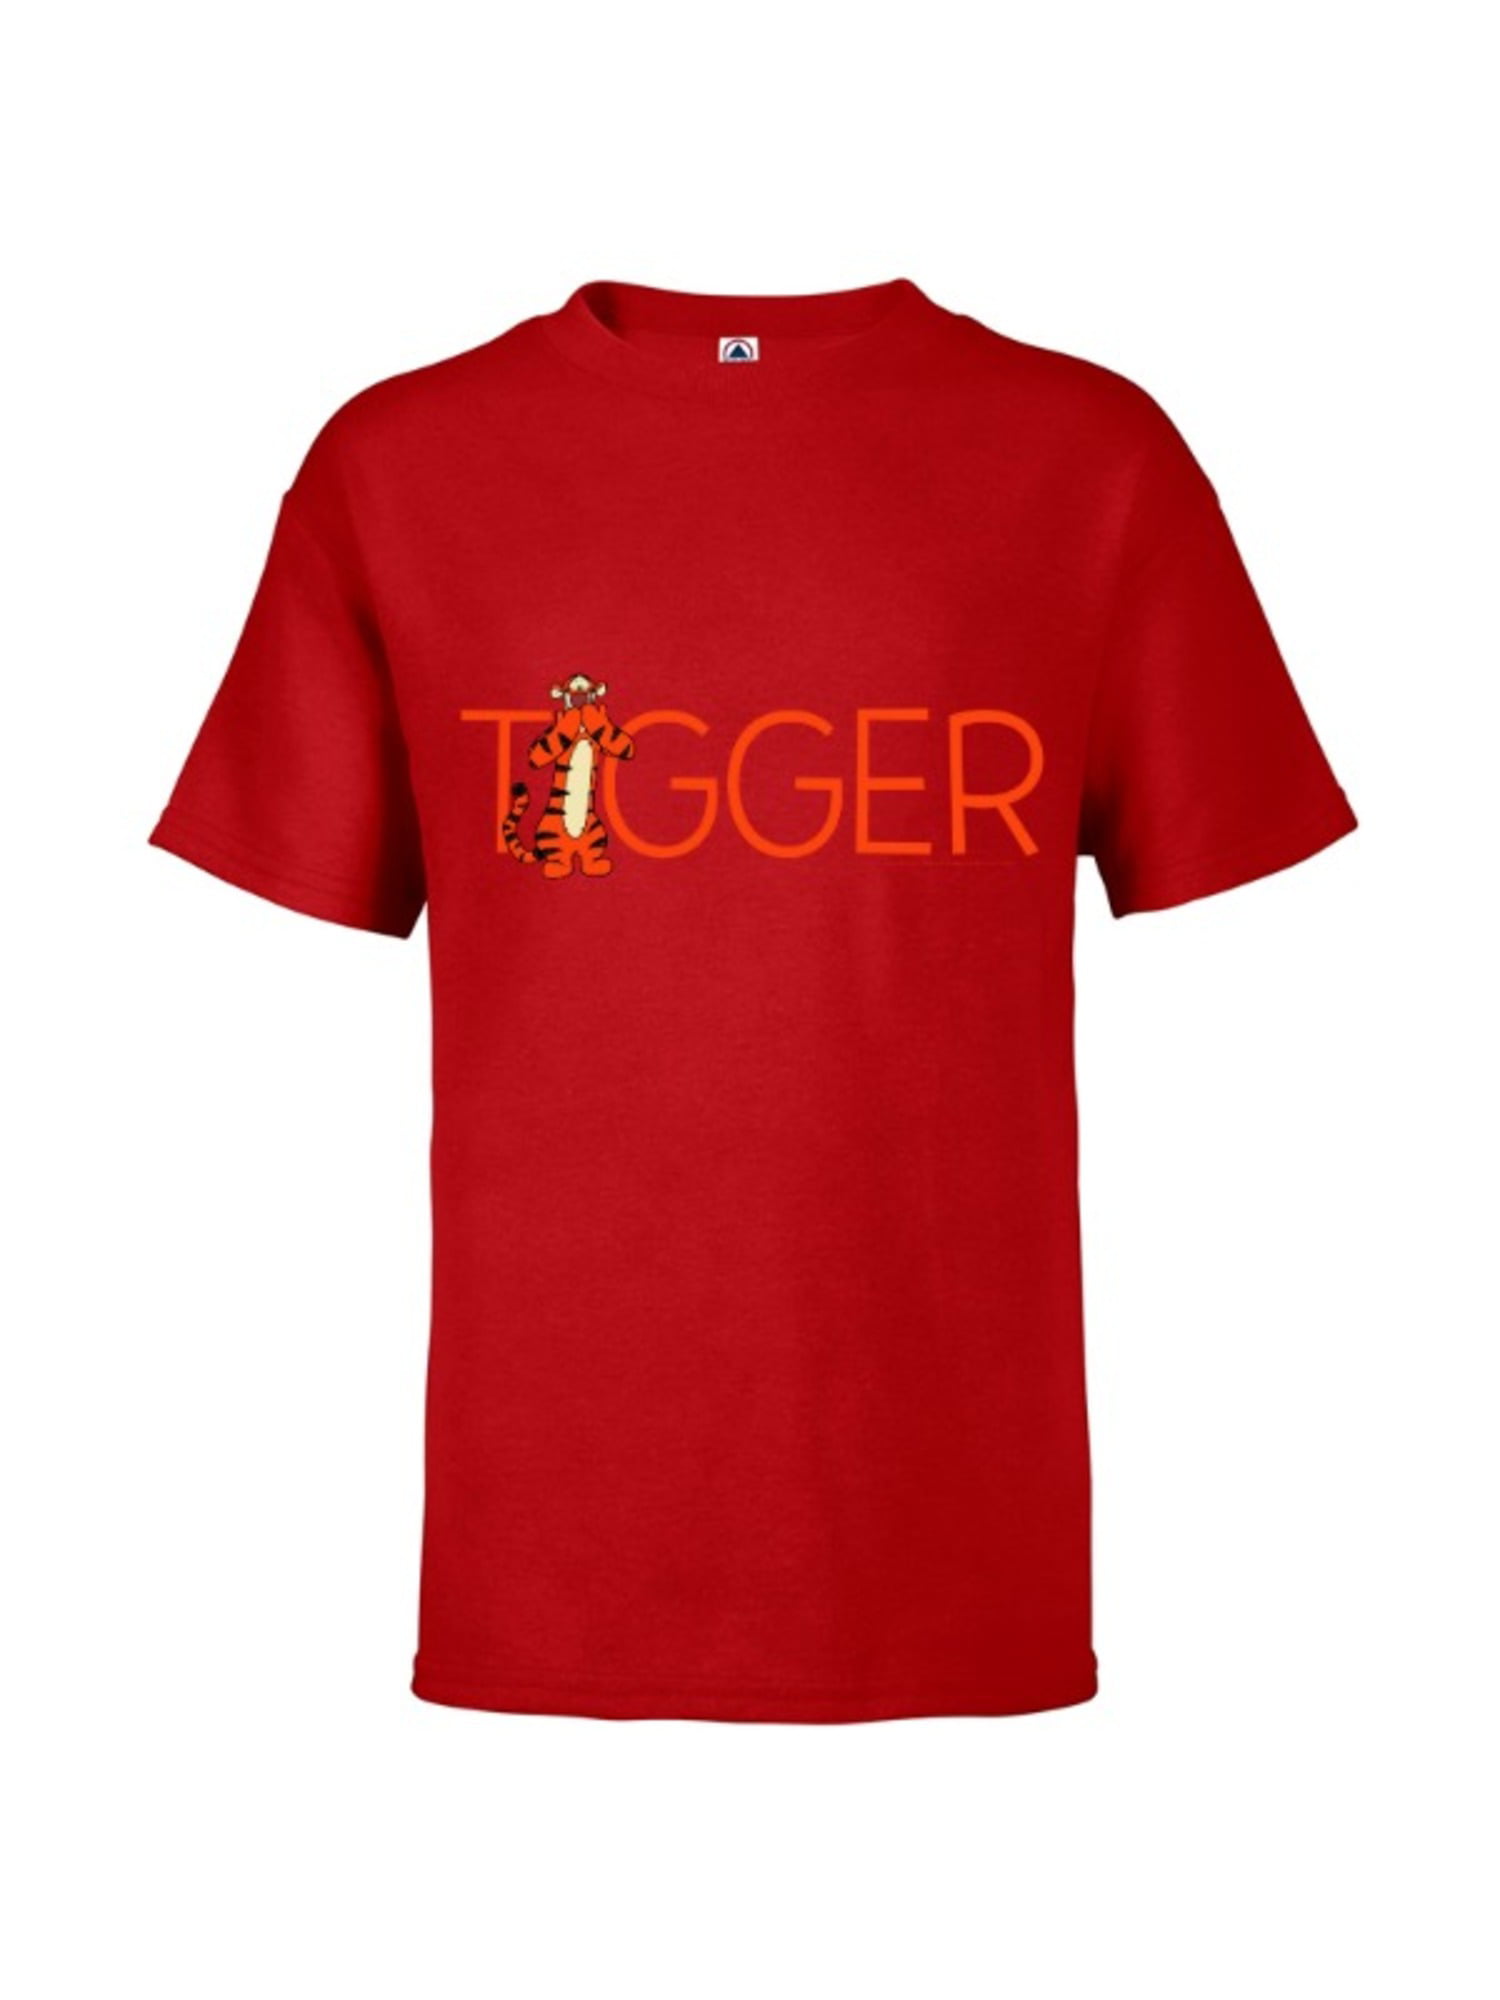 Tigger Shoot Winnie The Pooh Men Women Unisex V-Neck Short Sleeve Top T-Shirt 